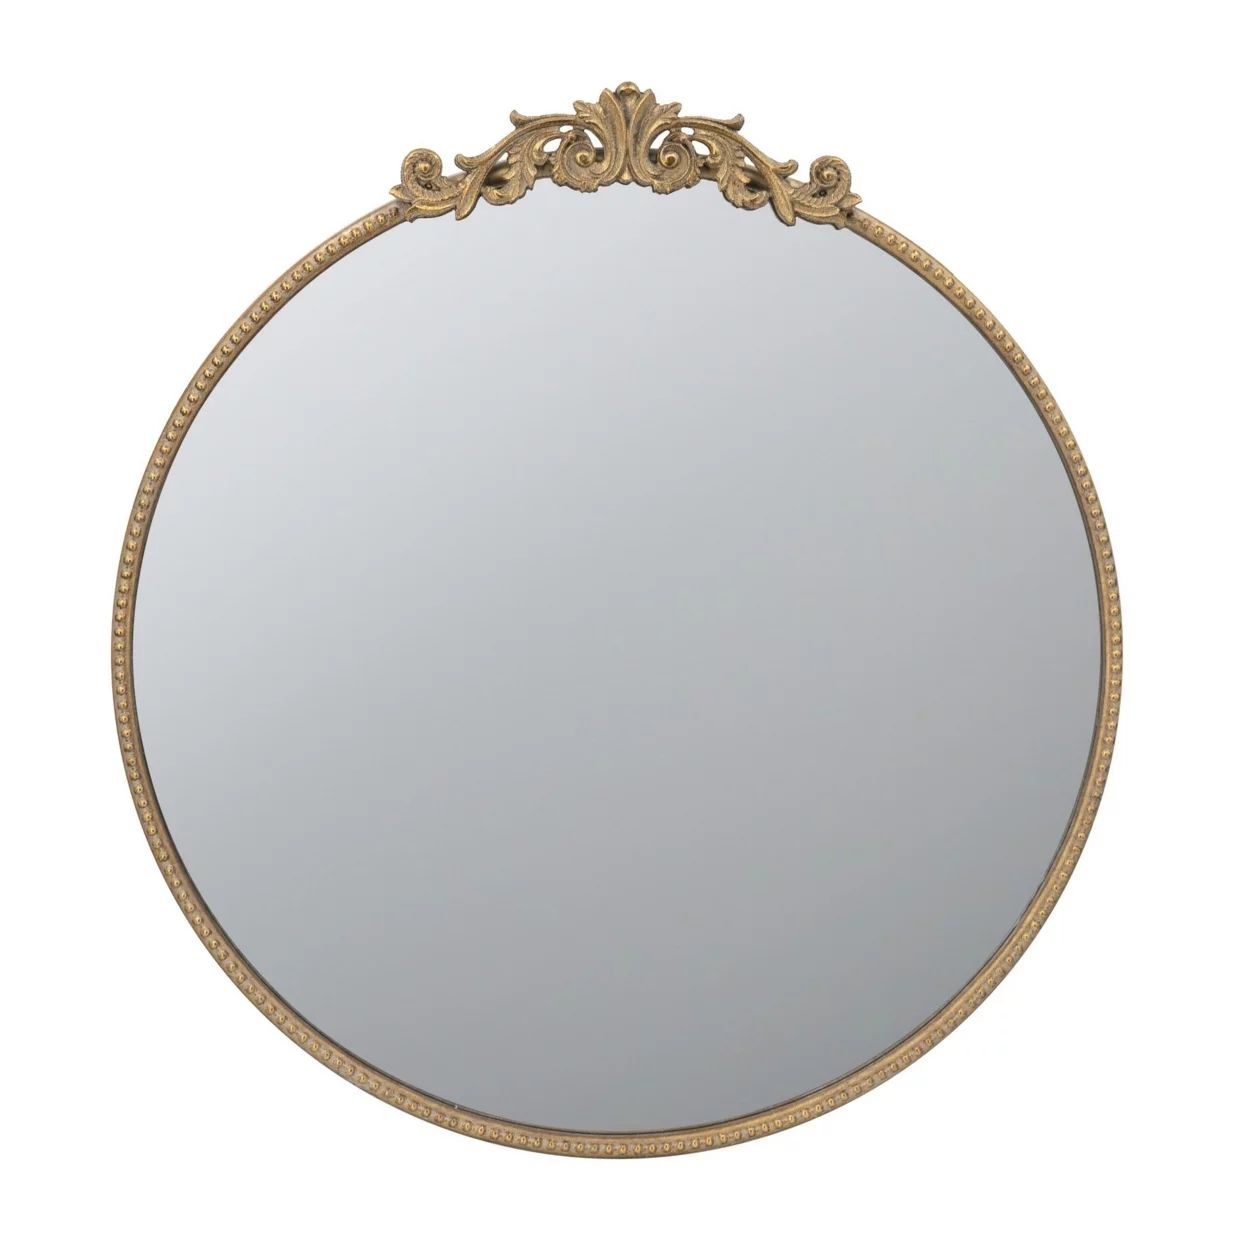 Kea 32 Inch Vintage Round Wall Mirror, Gold Metal Frame, Baroque Design- Saltoro Sherpi | Walmart (US)